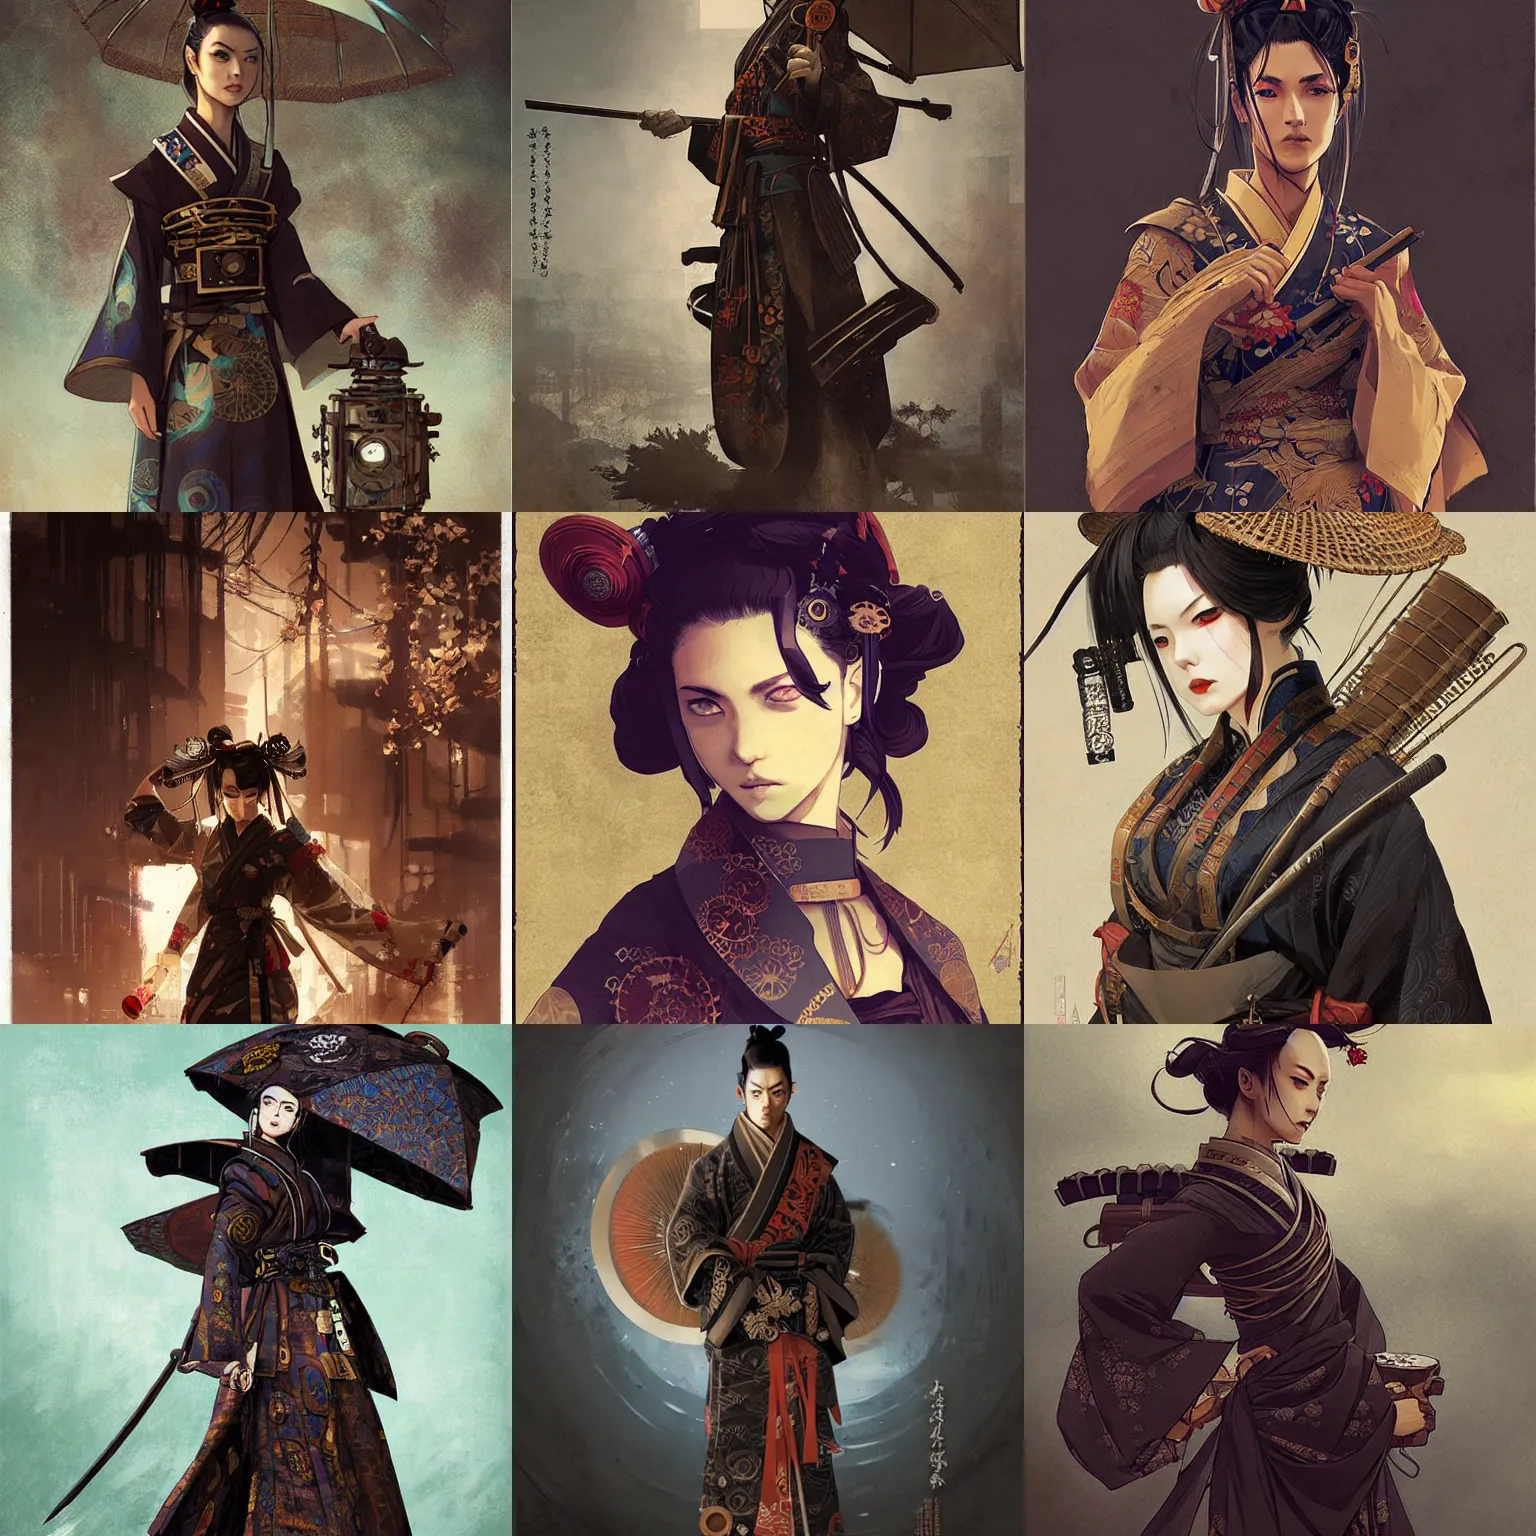 Prompt: steampunk samurai wearing yukata, by greg rutkowski, artgerm, takato yomamoto, rule of thirds, fierce look, beautiful